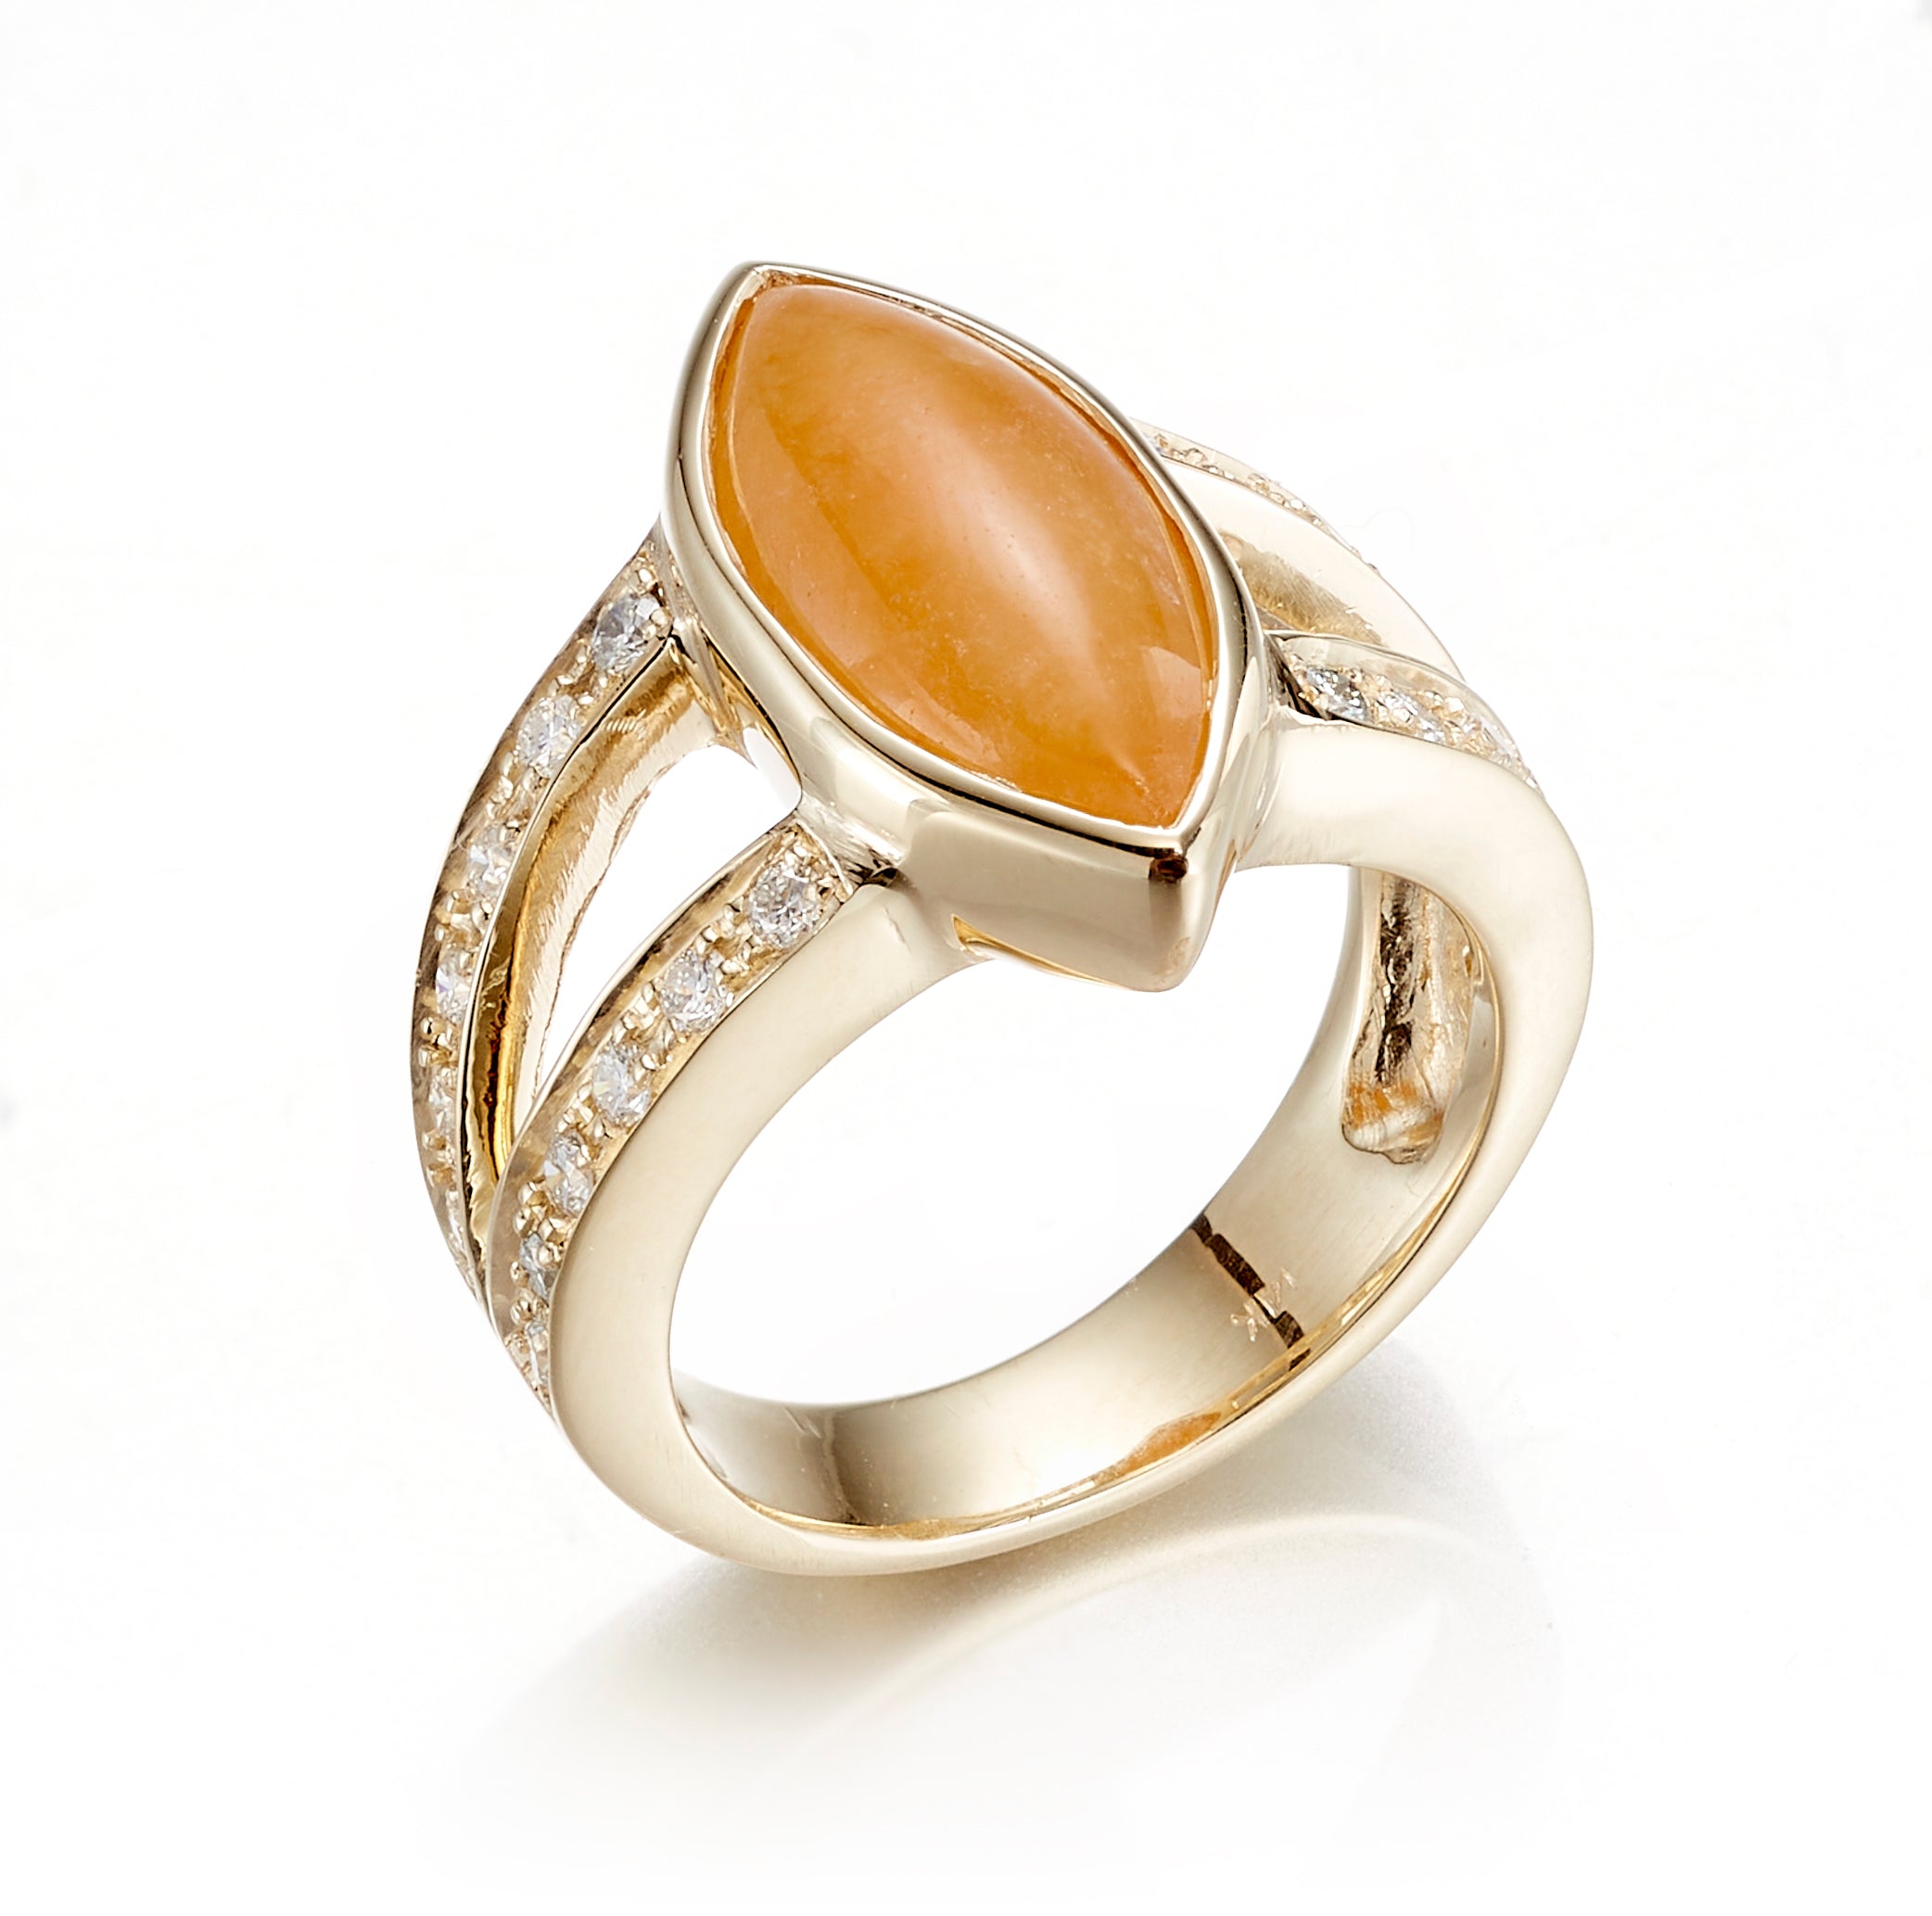 Buy Orange Stone Ring Online In India - Etsy India